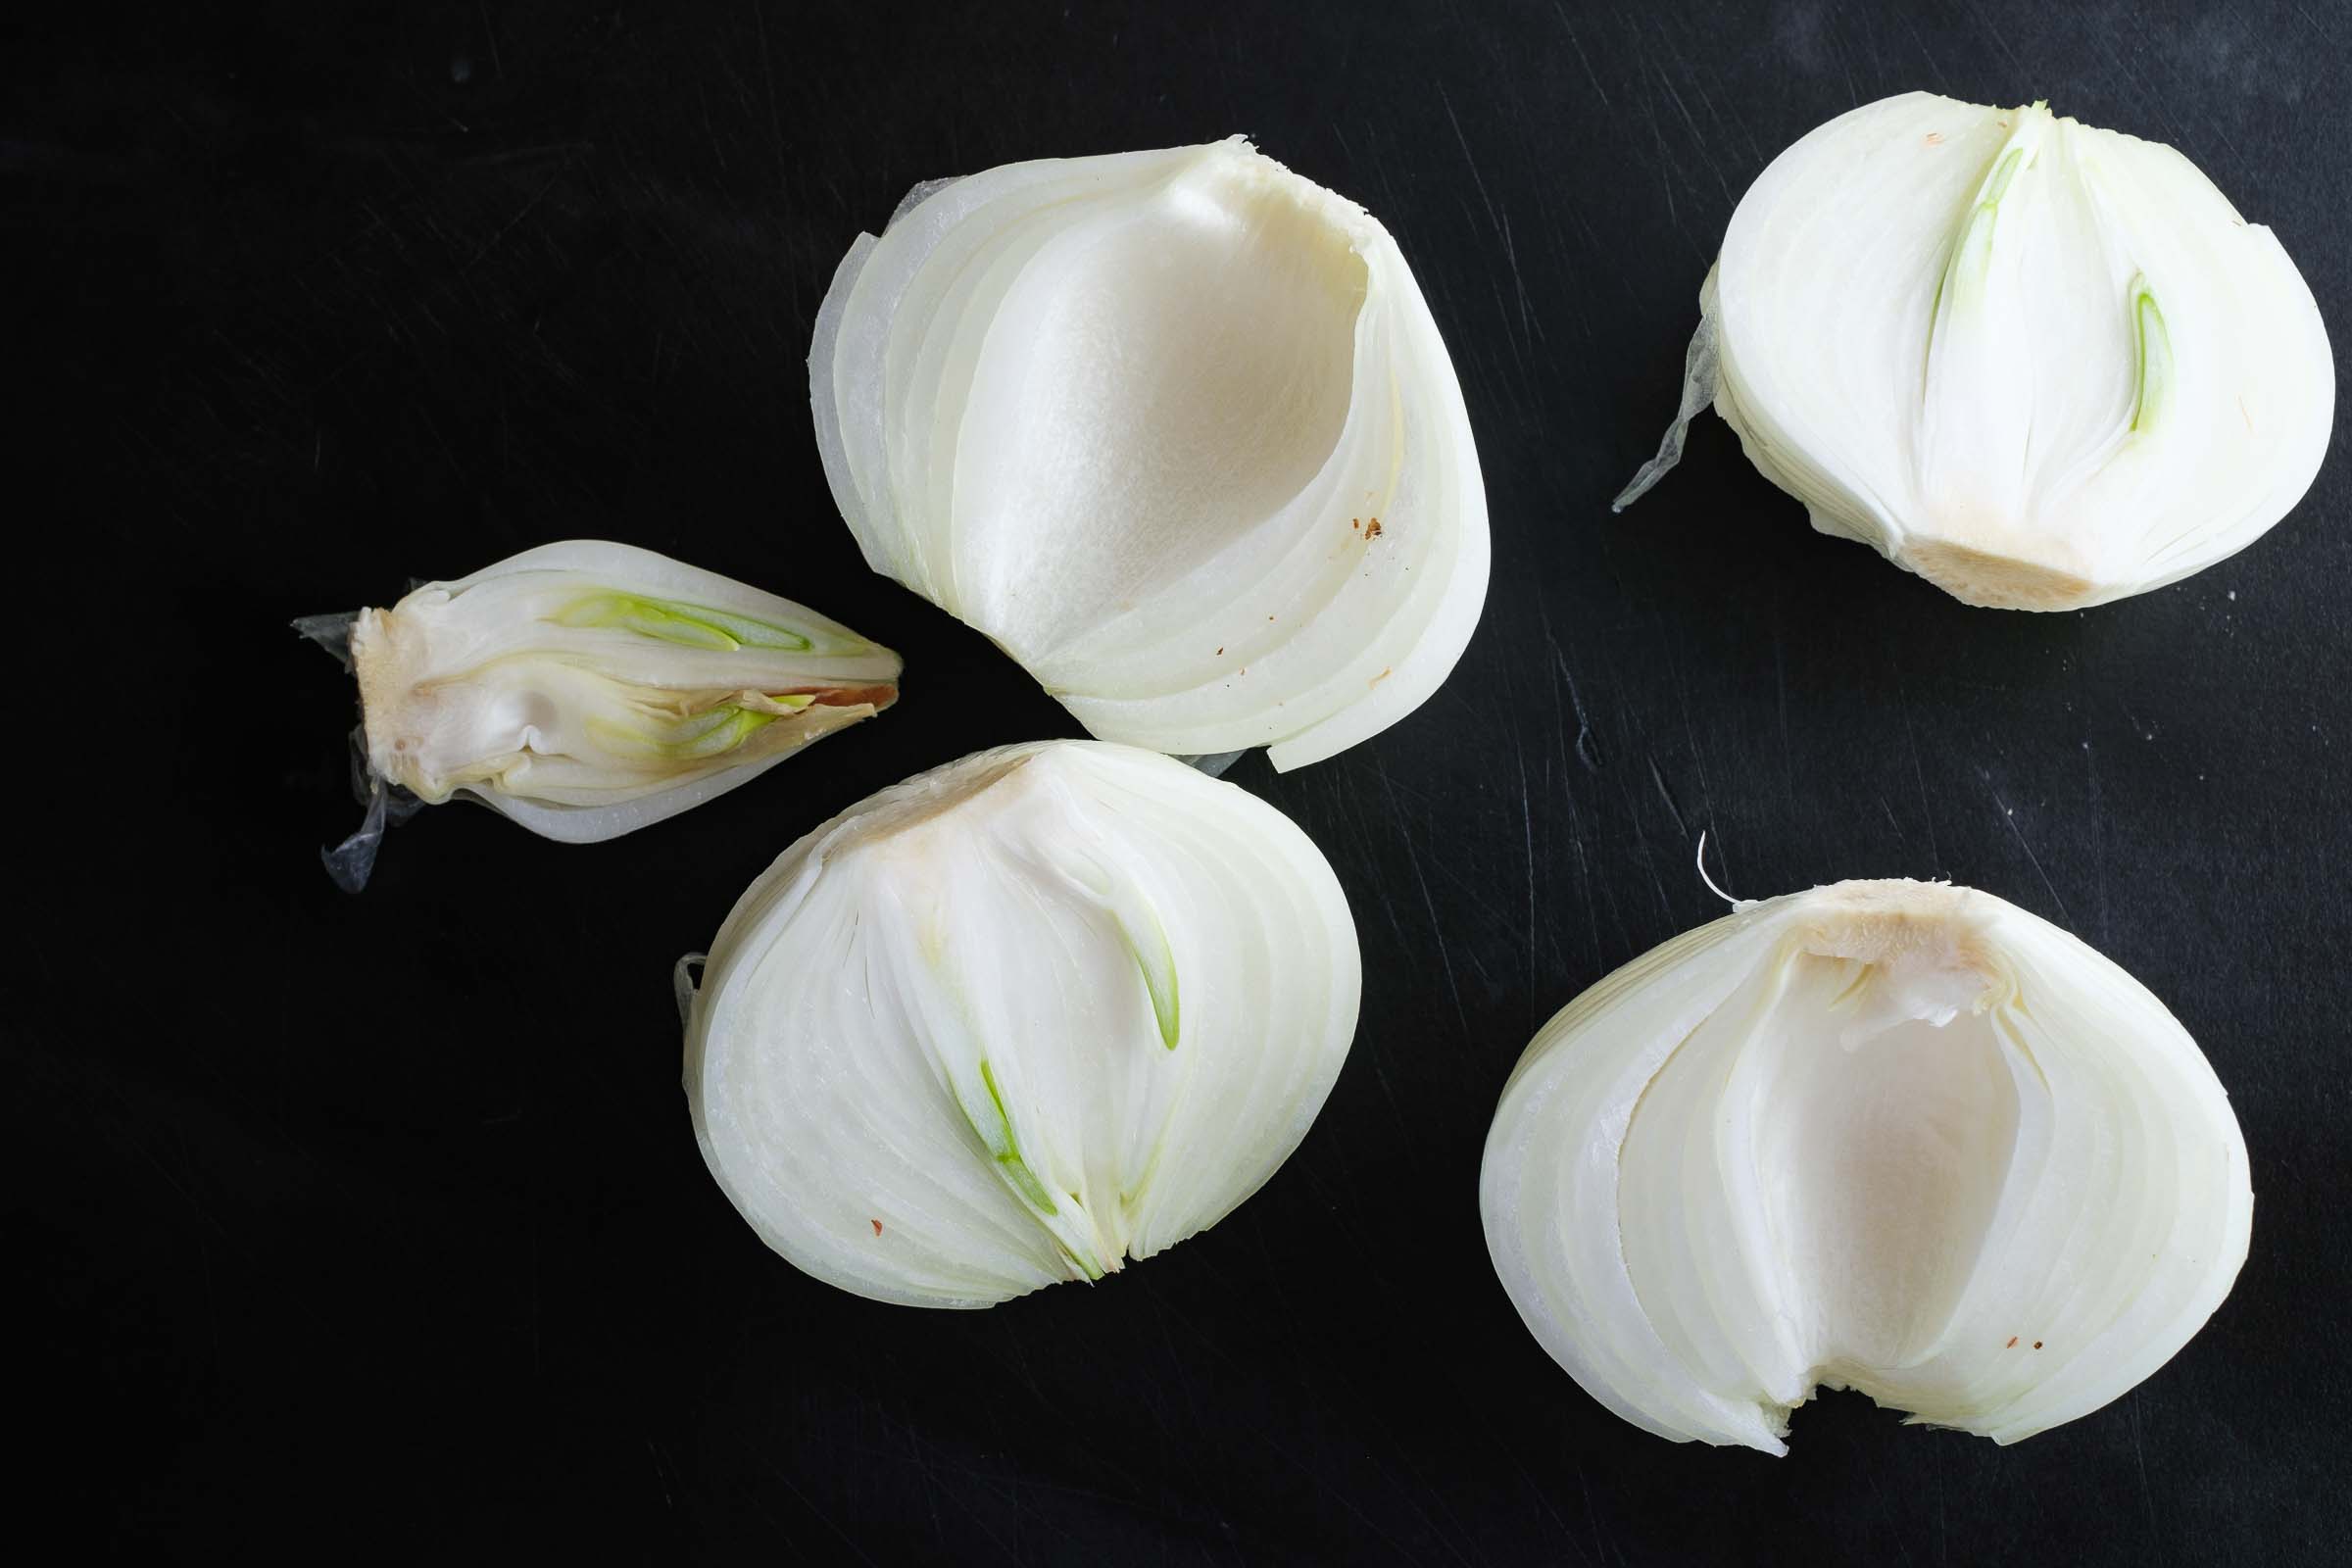 Onion peeled